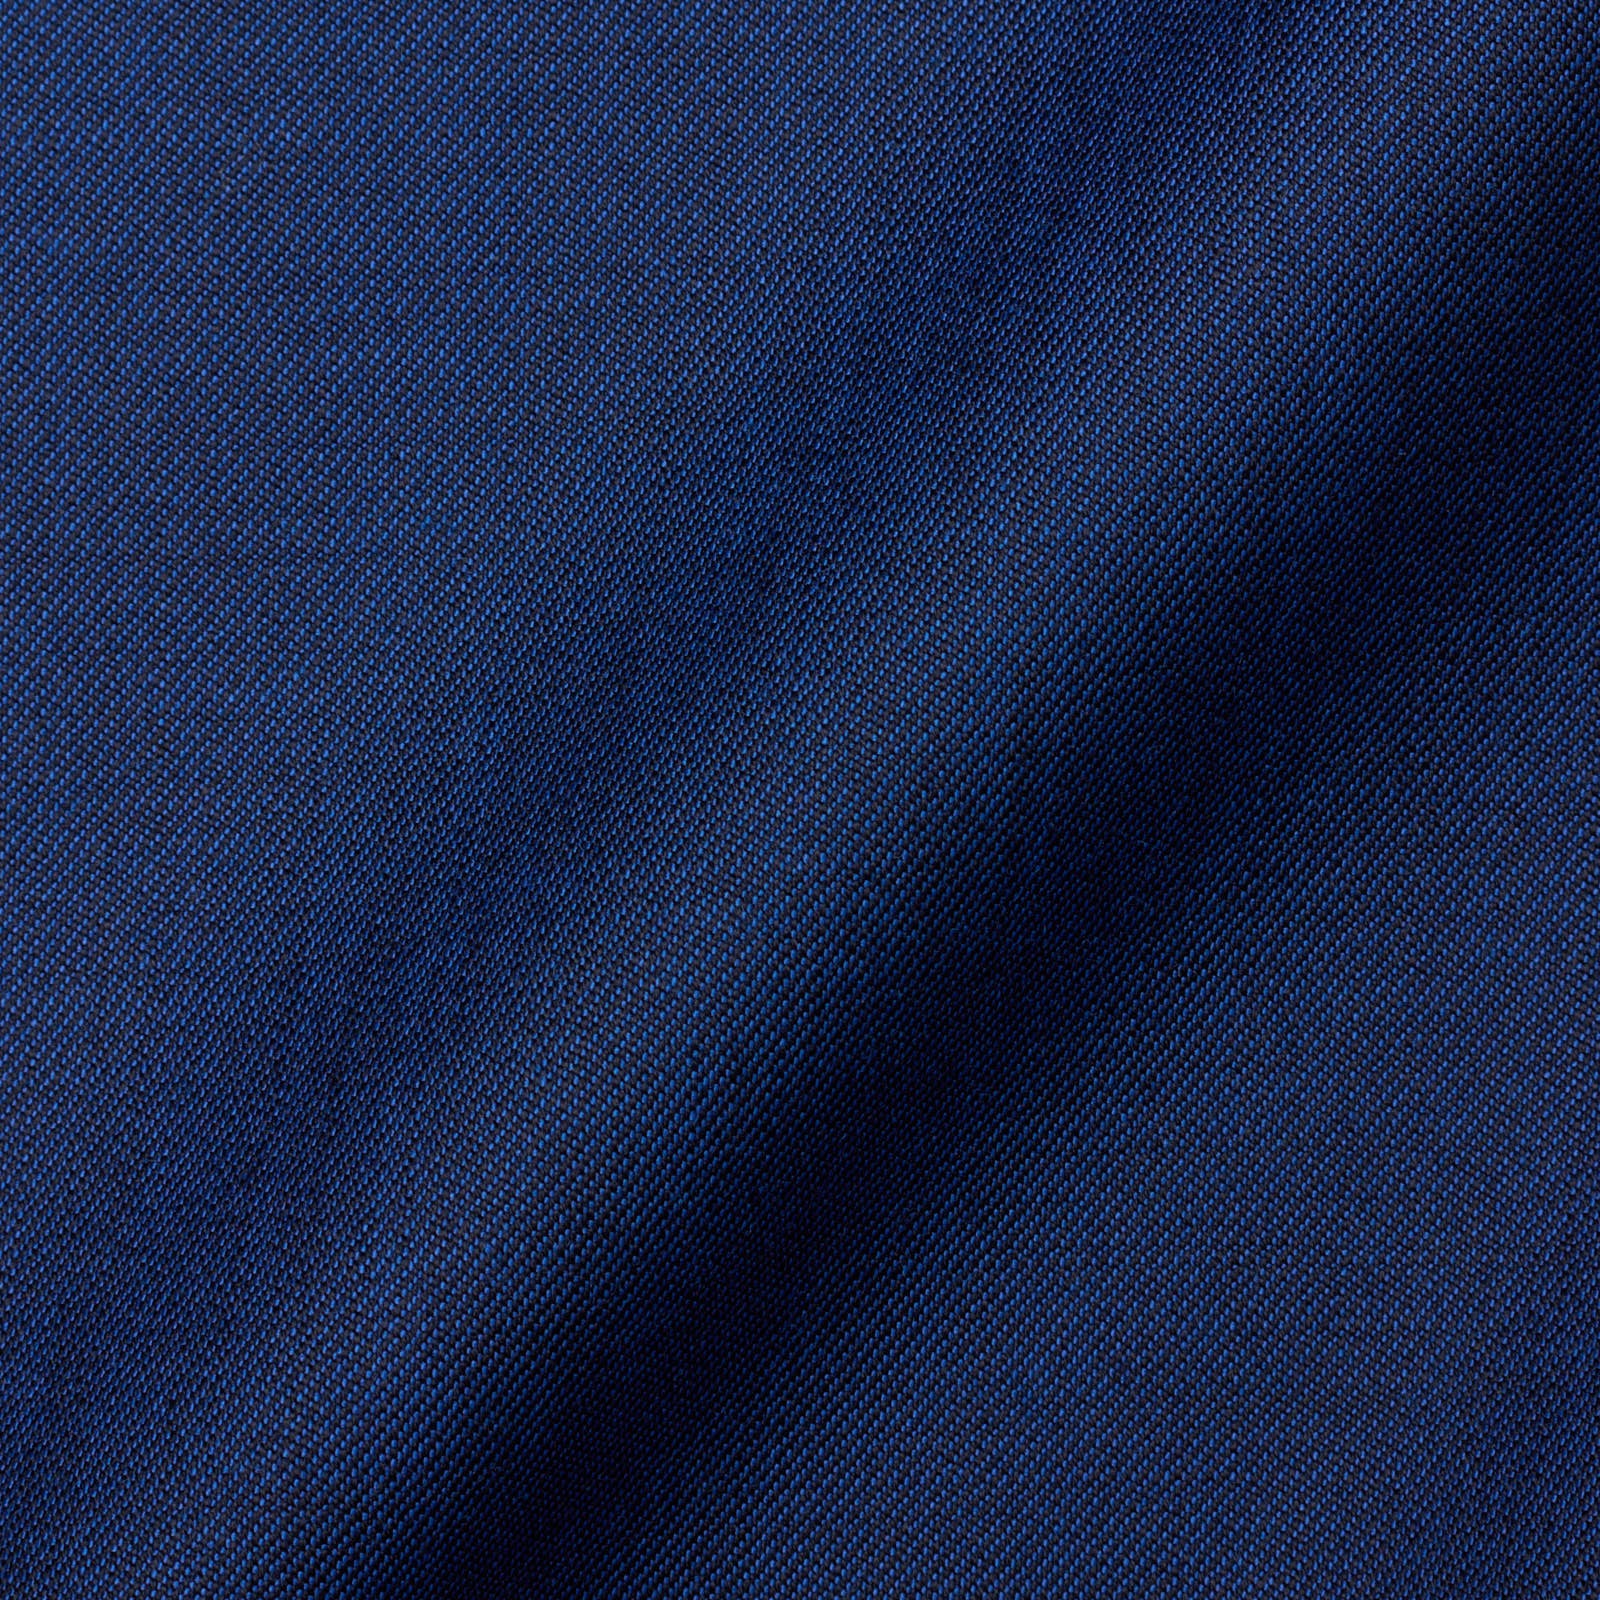 MAURO BLASI x VANNUCCI Handmade Blue Wool Jacket Blazer EU 54 NEW US 42 Slim